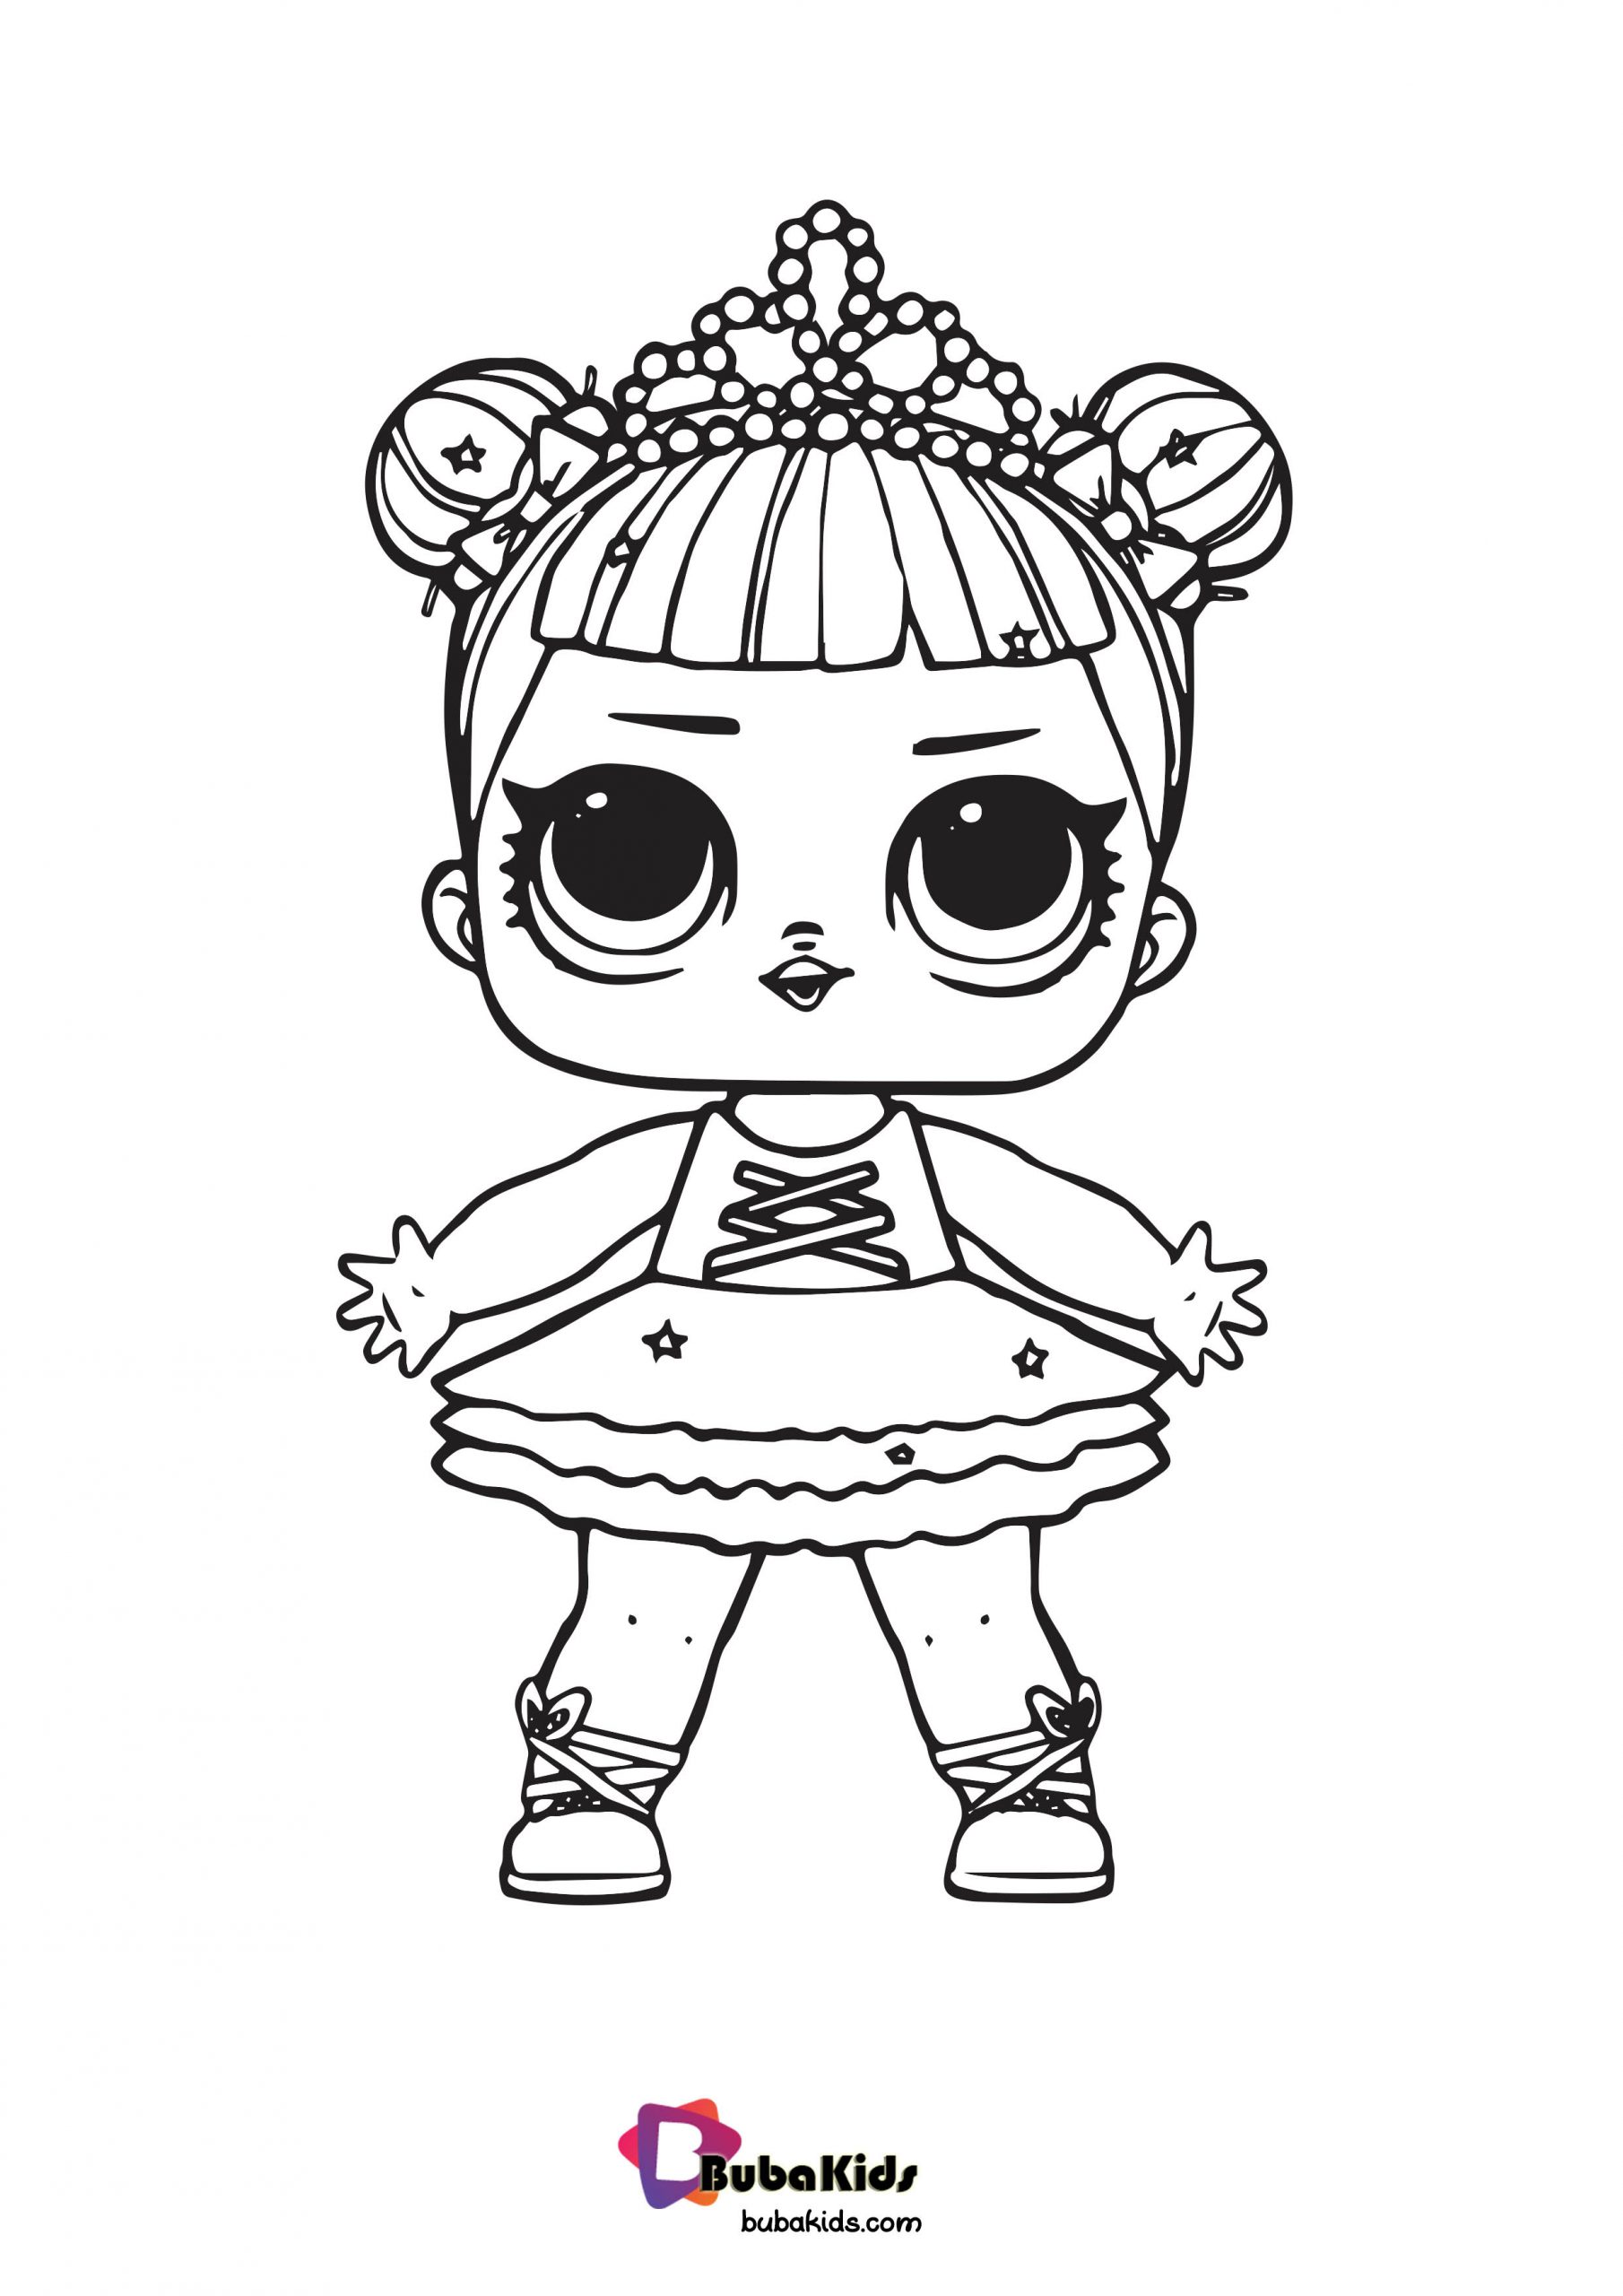 LOL Princess Doll Coloring Page   BubaKids.com